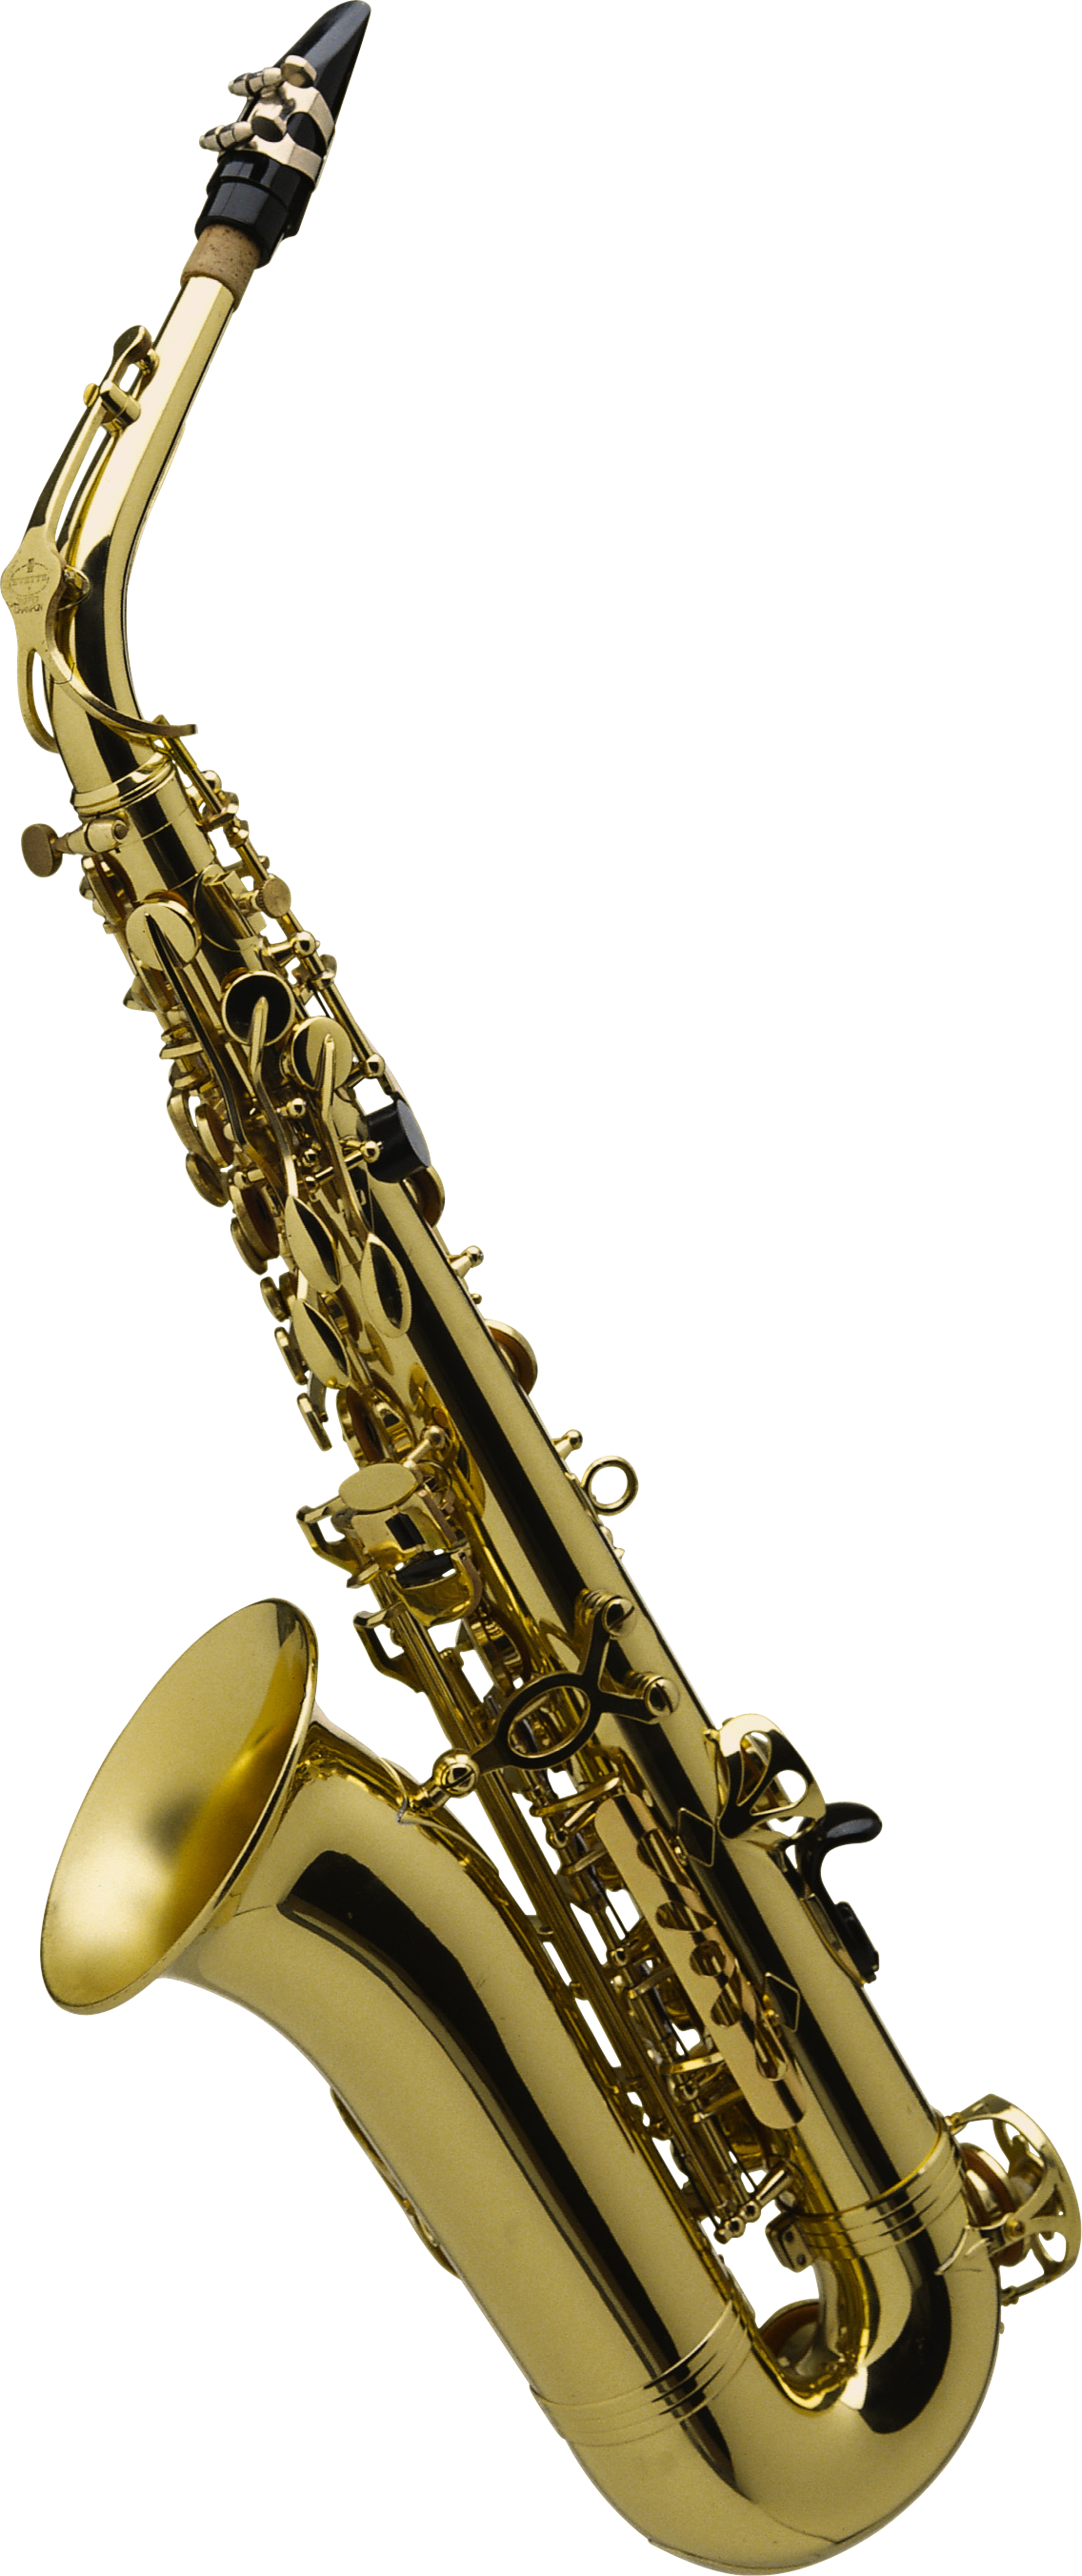 gold clipart saxophone